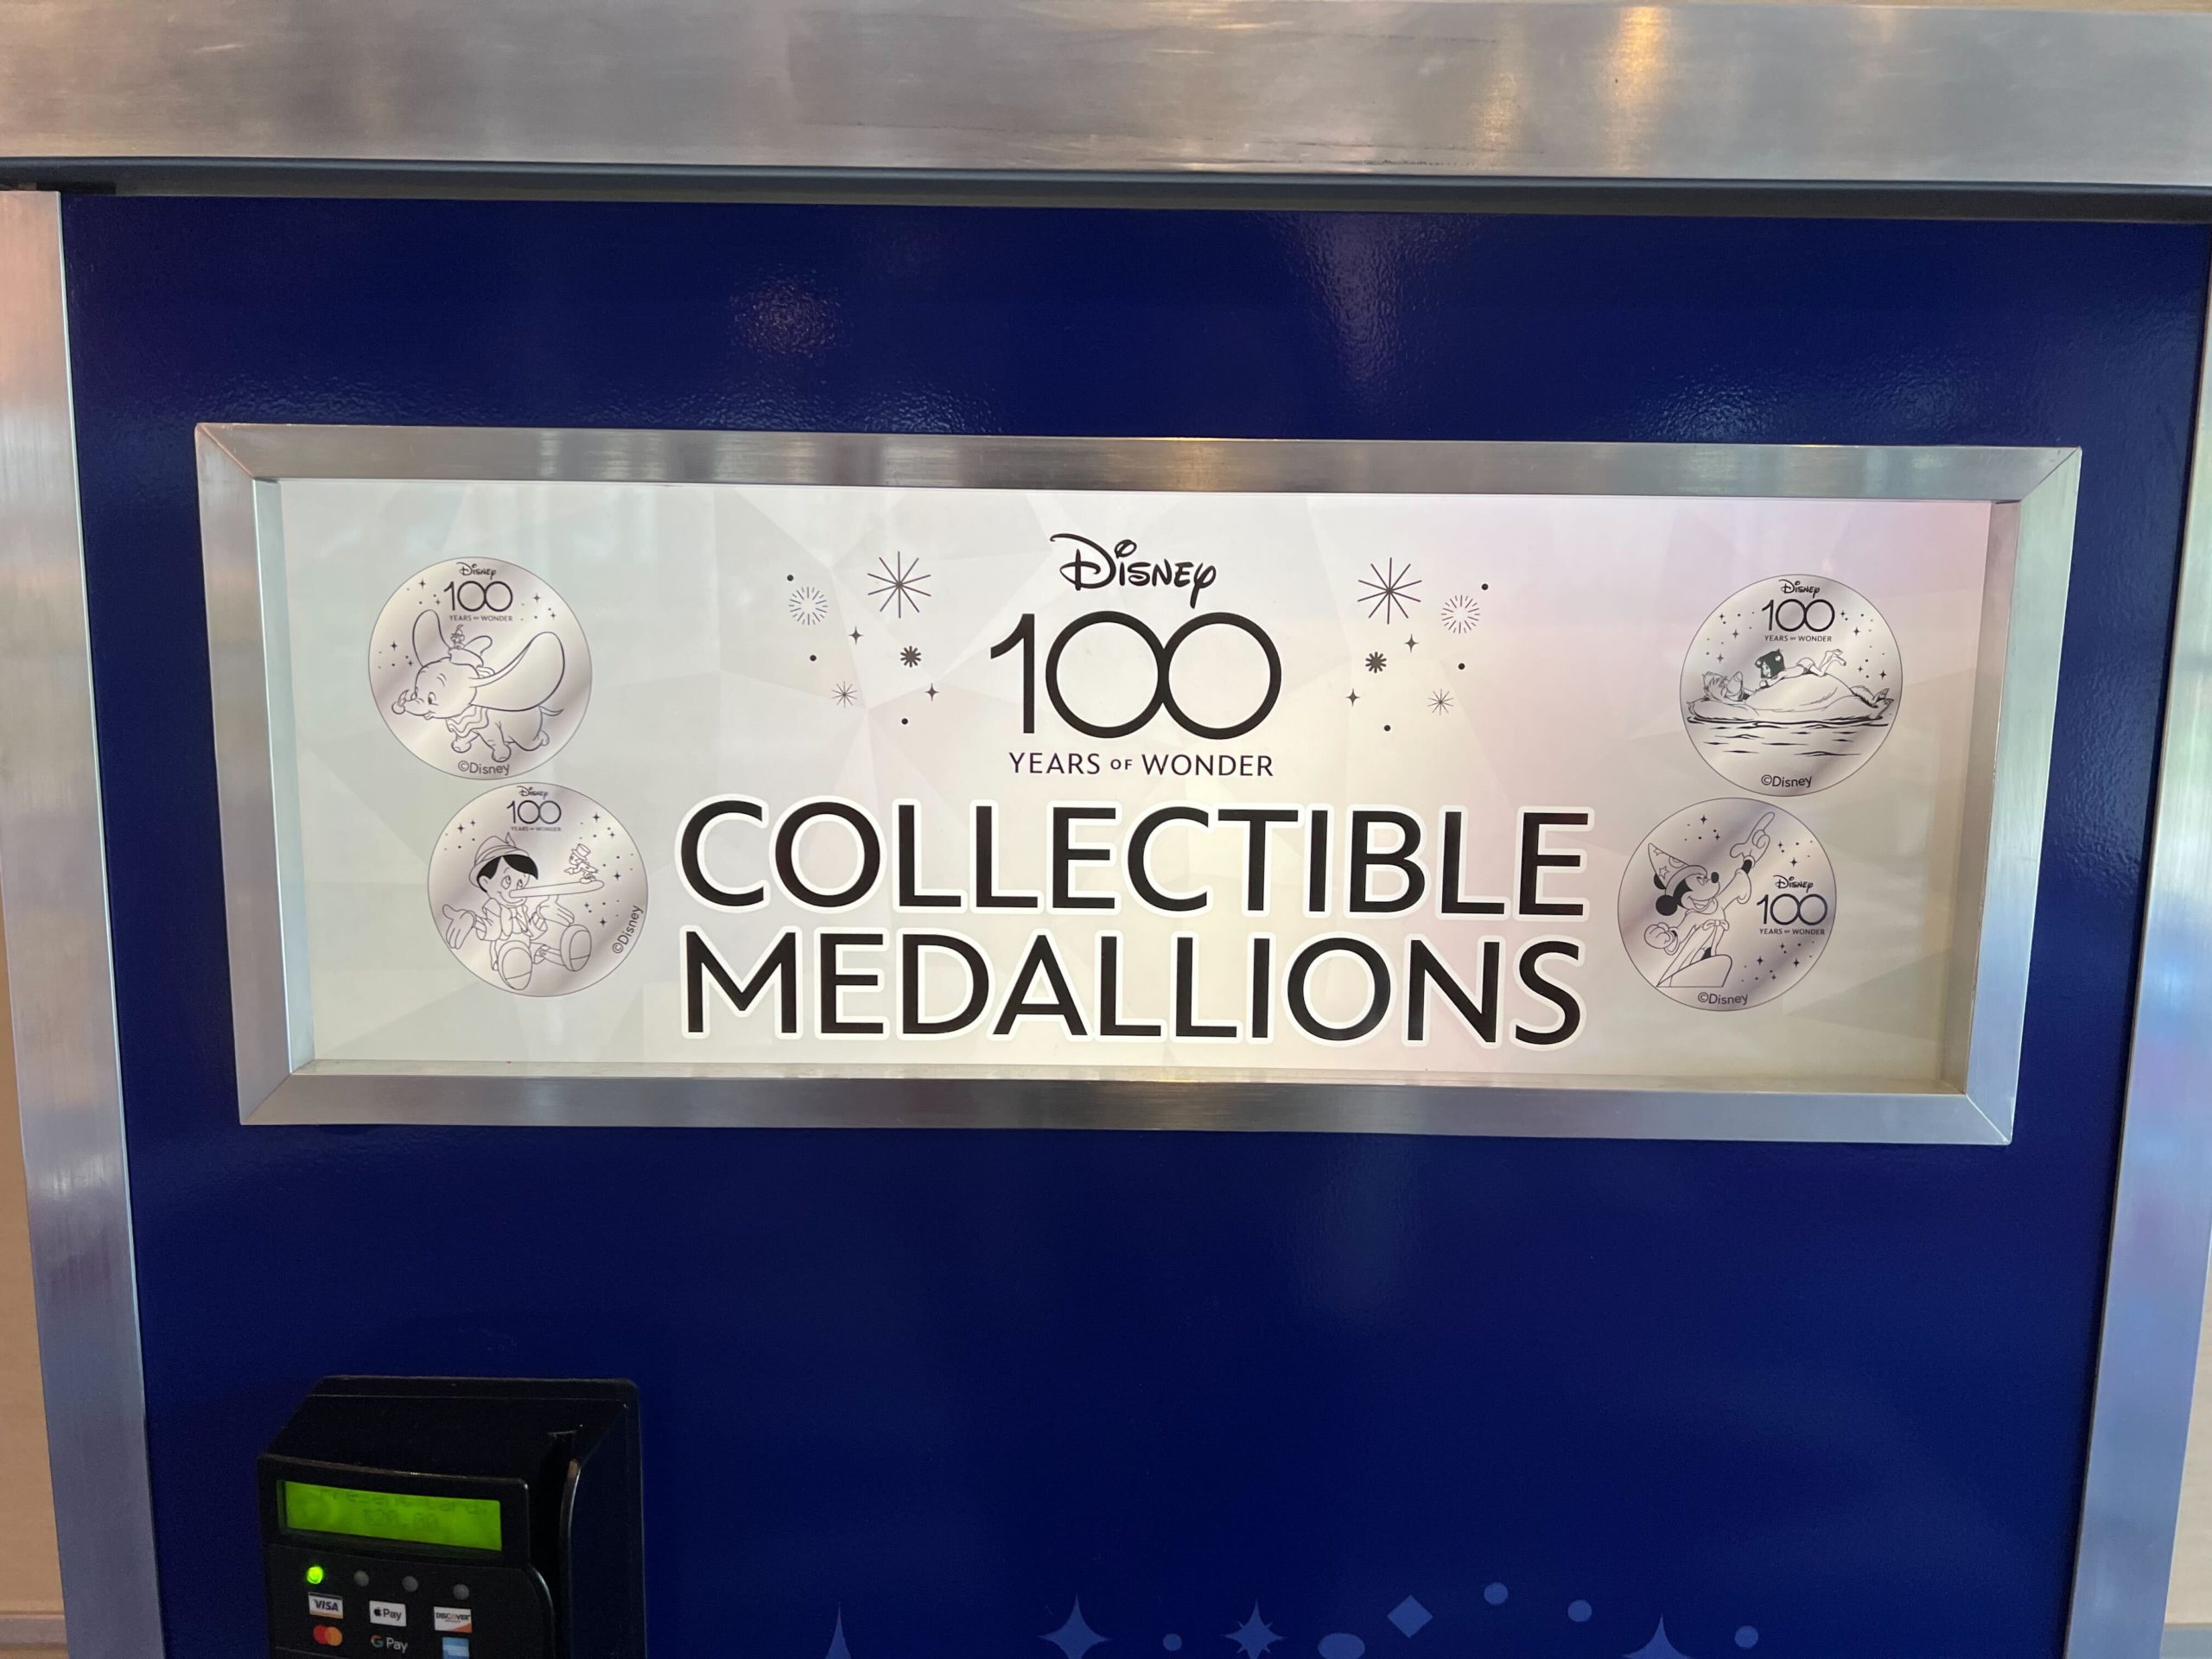 Disneyland Disney100 Collectible Medallions